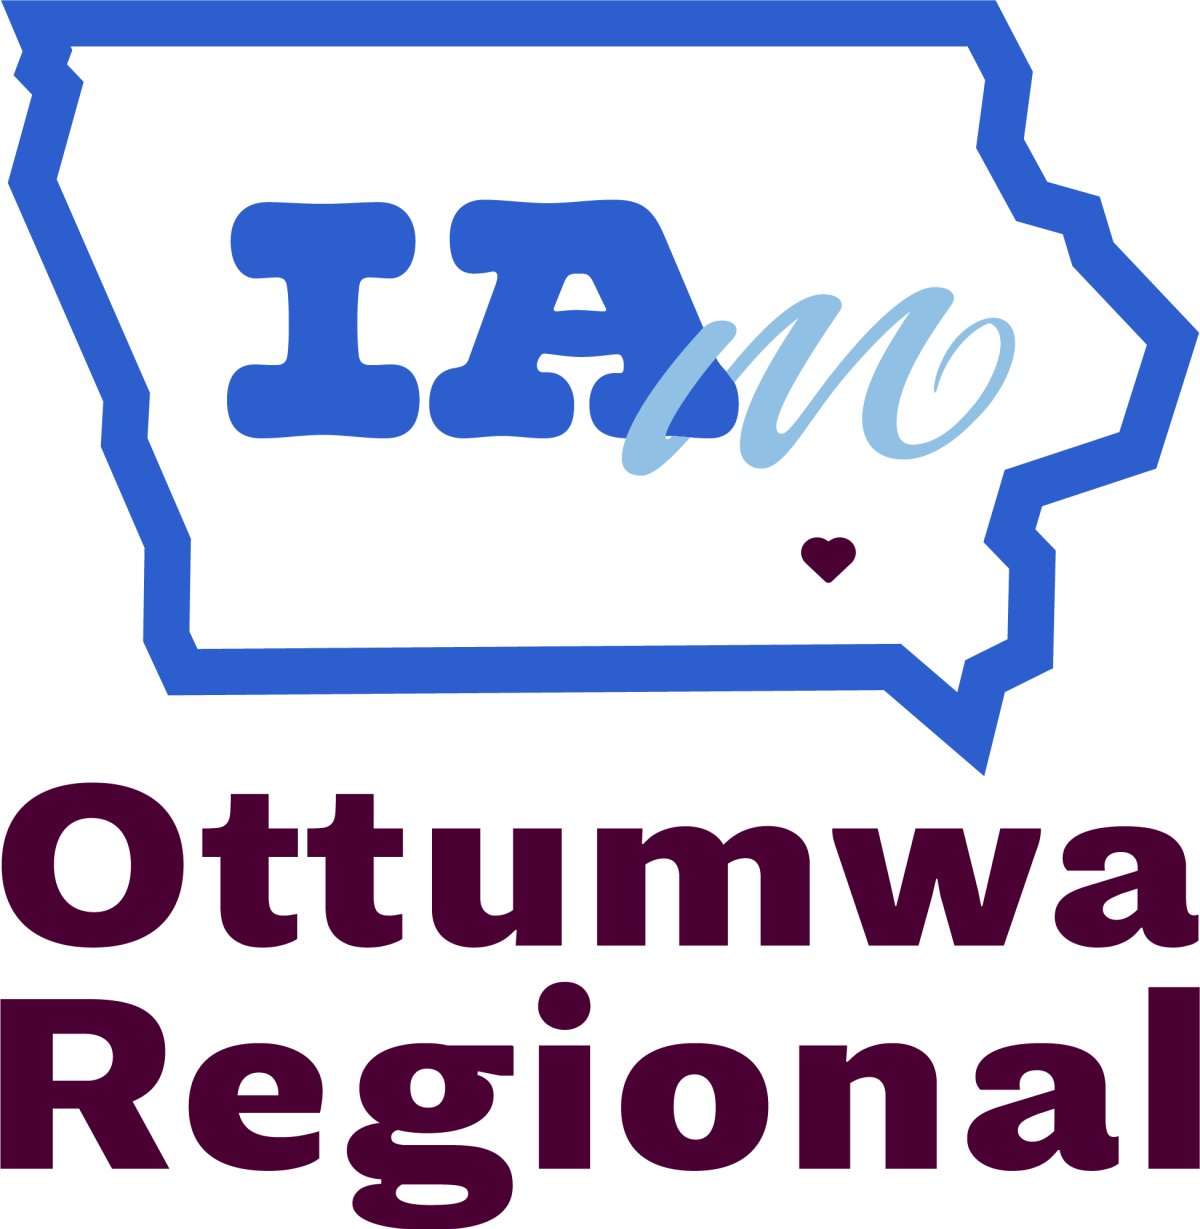 I Am Ottumwa Regional